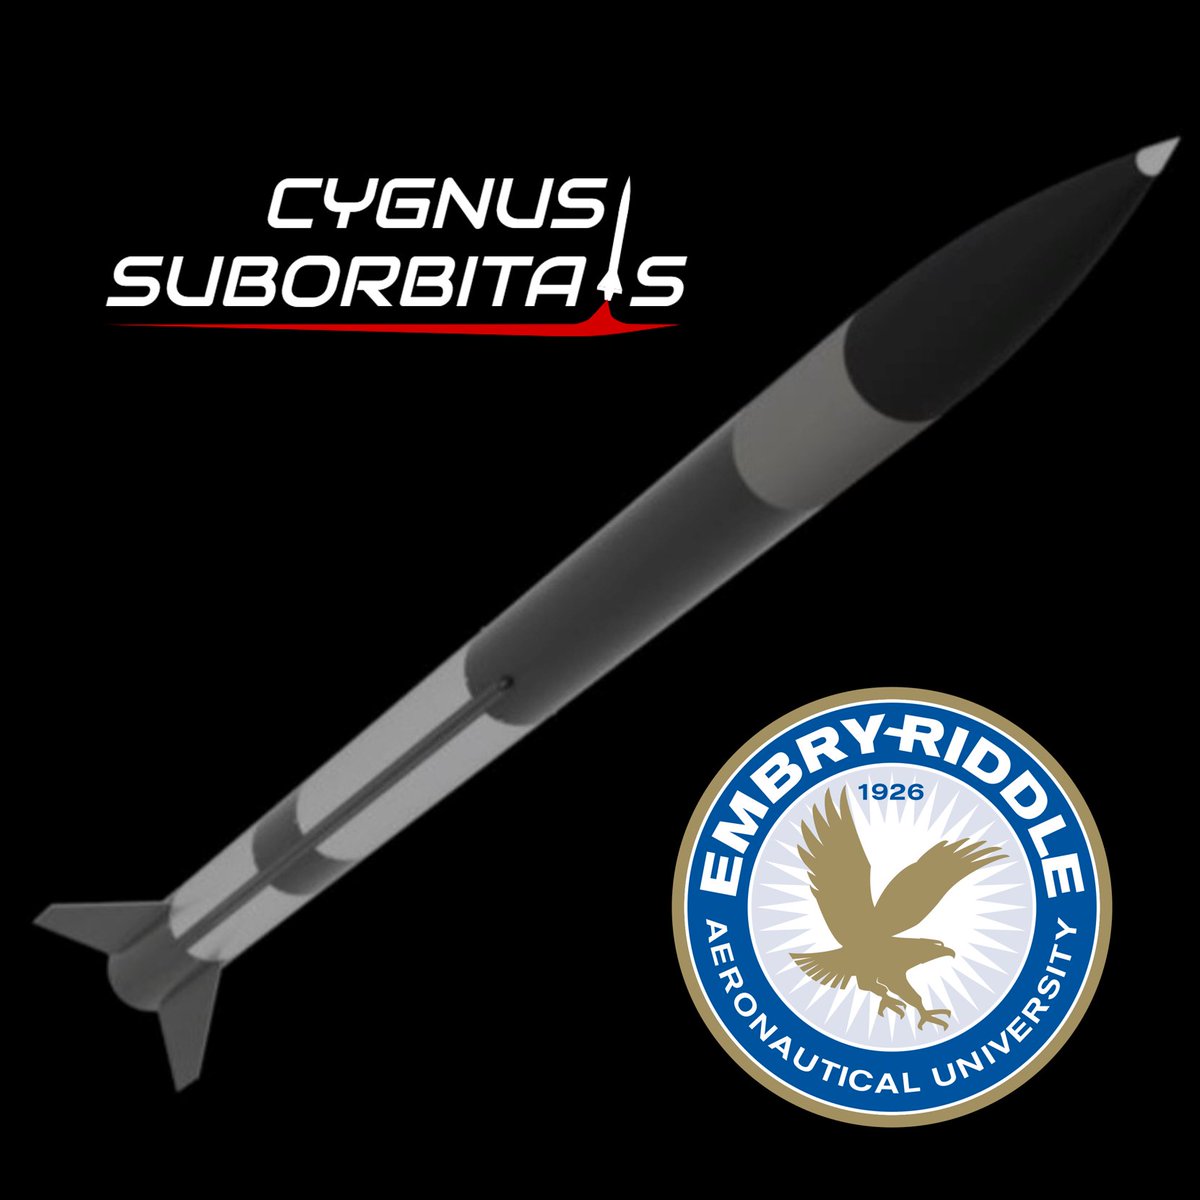 Progress continues with ERAU's Cygnus Suborbitals Team & their Deneb rocket launch.  The countdown continues! #ERAU #aeronauticalengineering #partnersinspace   dtb.com